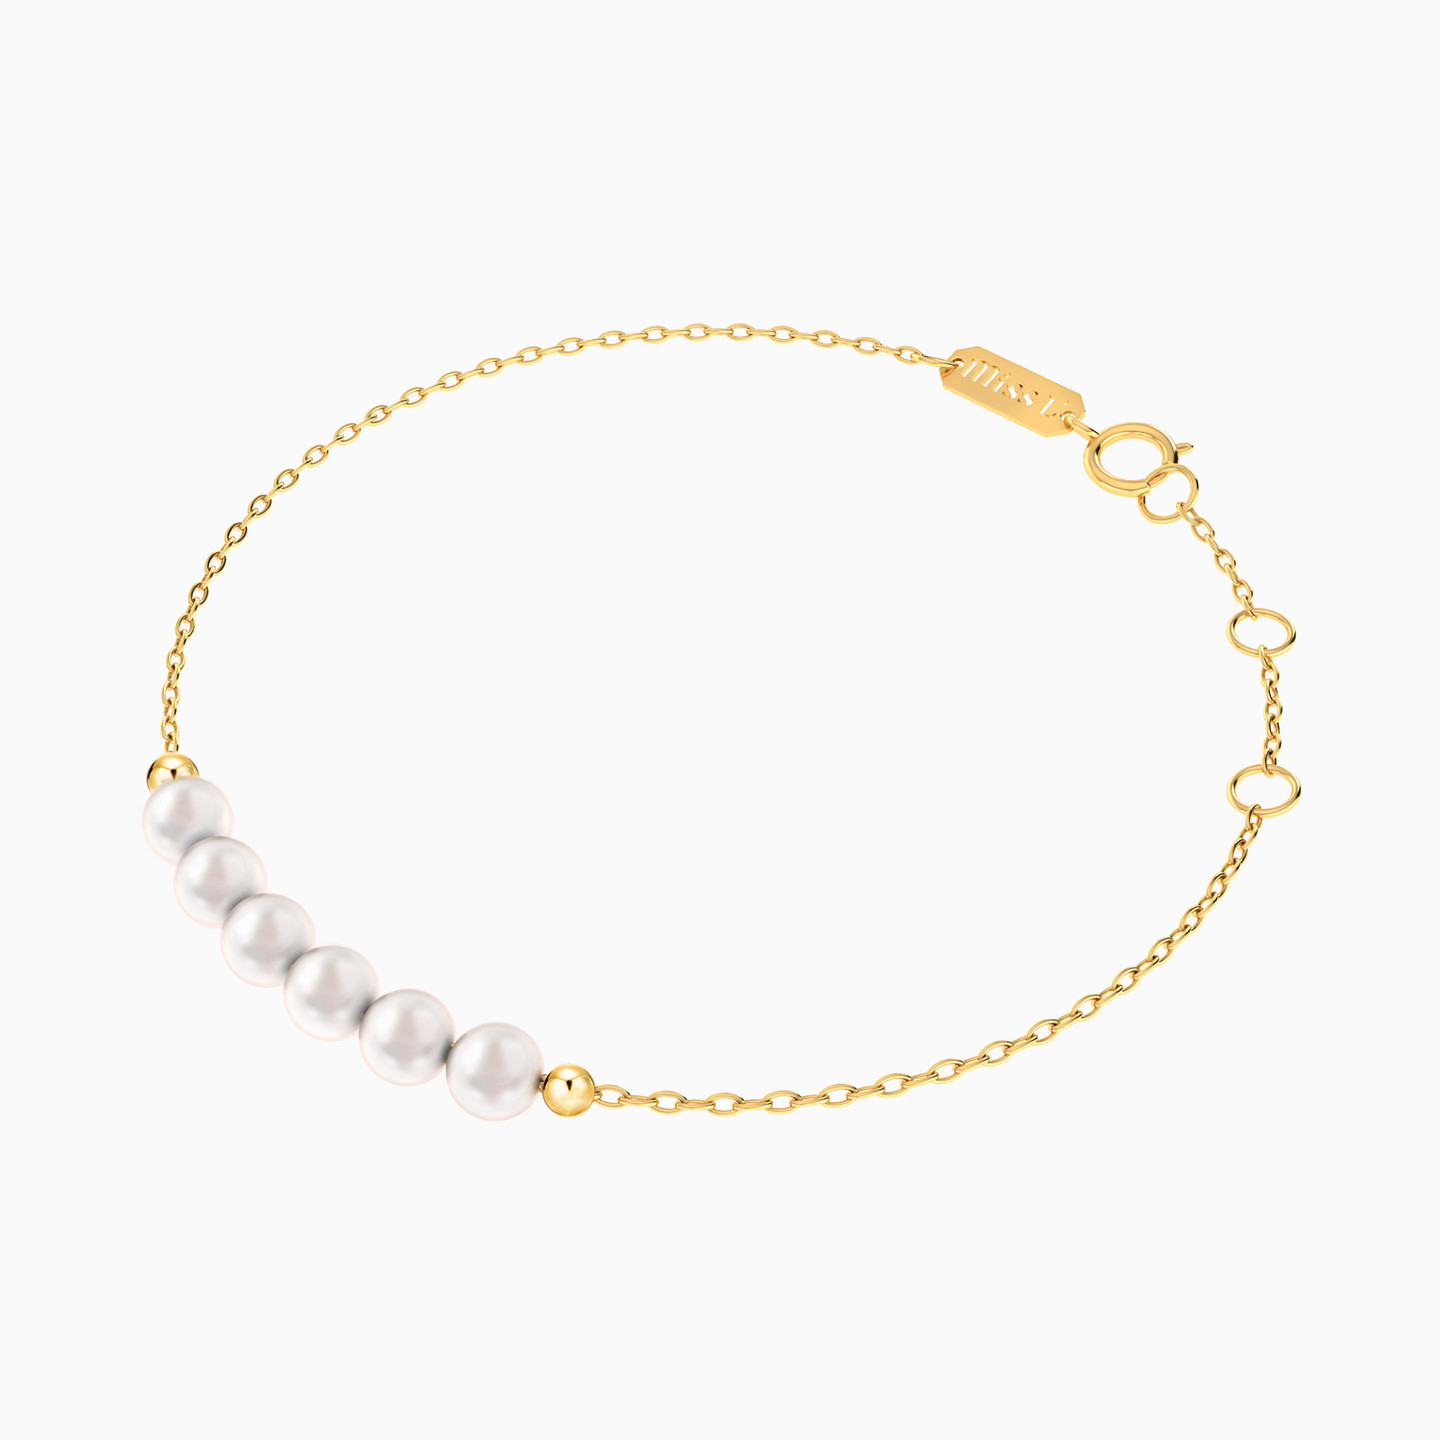 18K Gold Pearls Chain Bracelet - 2